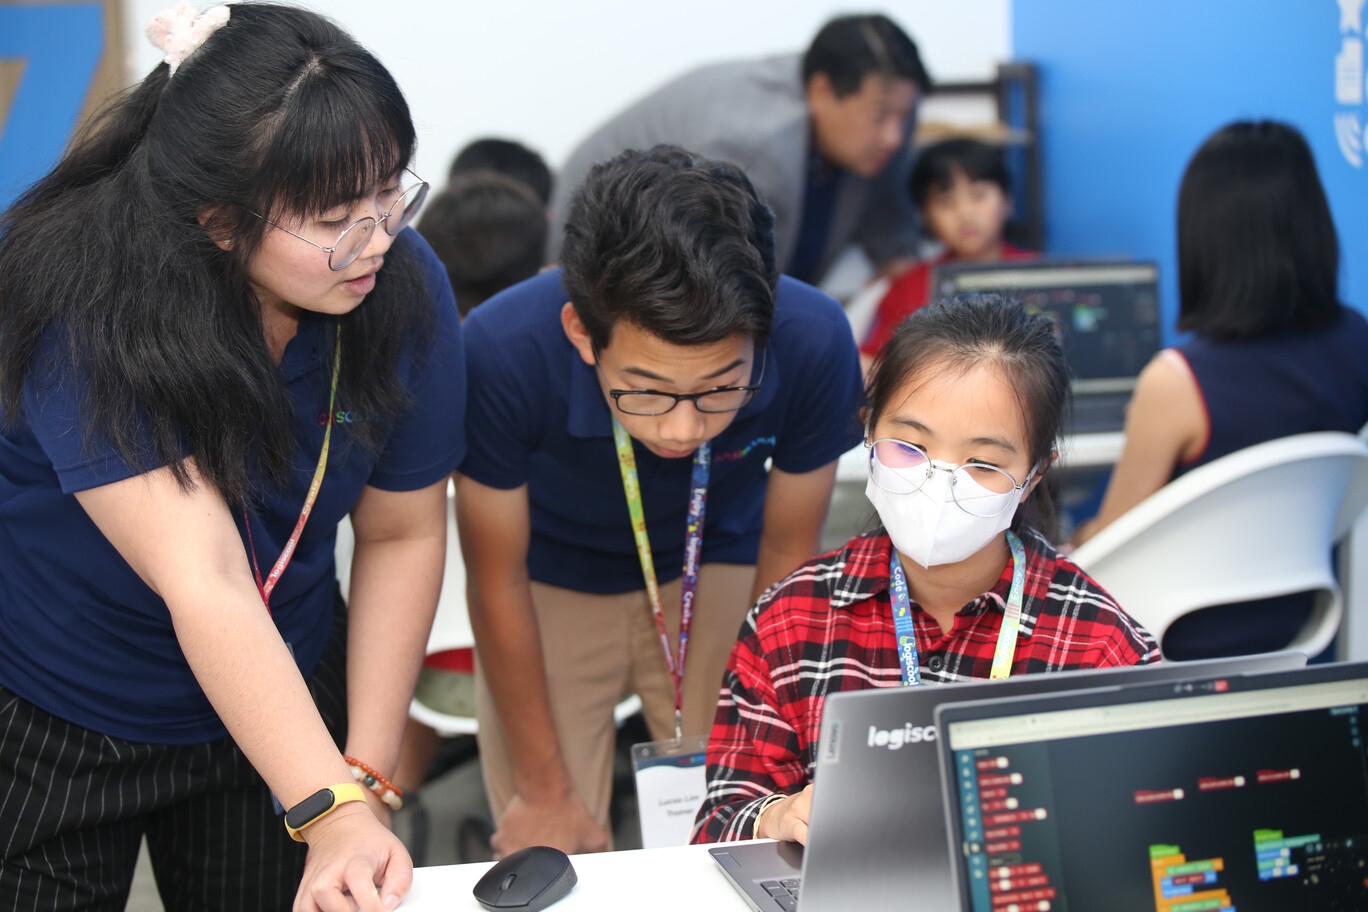 Logiscool (โลจิสคูล) สถาบันสอน Coding ระดับโลกเปิดแล้วแห่งแรกที่ไทย เรียนสนุก สร้างทักษะเด็กยุคดิจิทัล ตอบโจทย์เทรนด์อนาคต